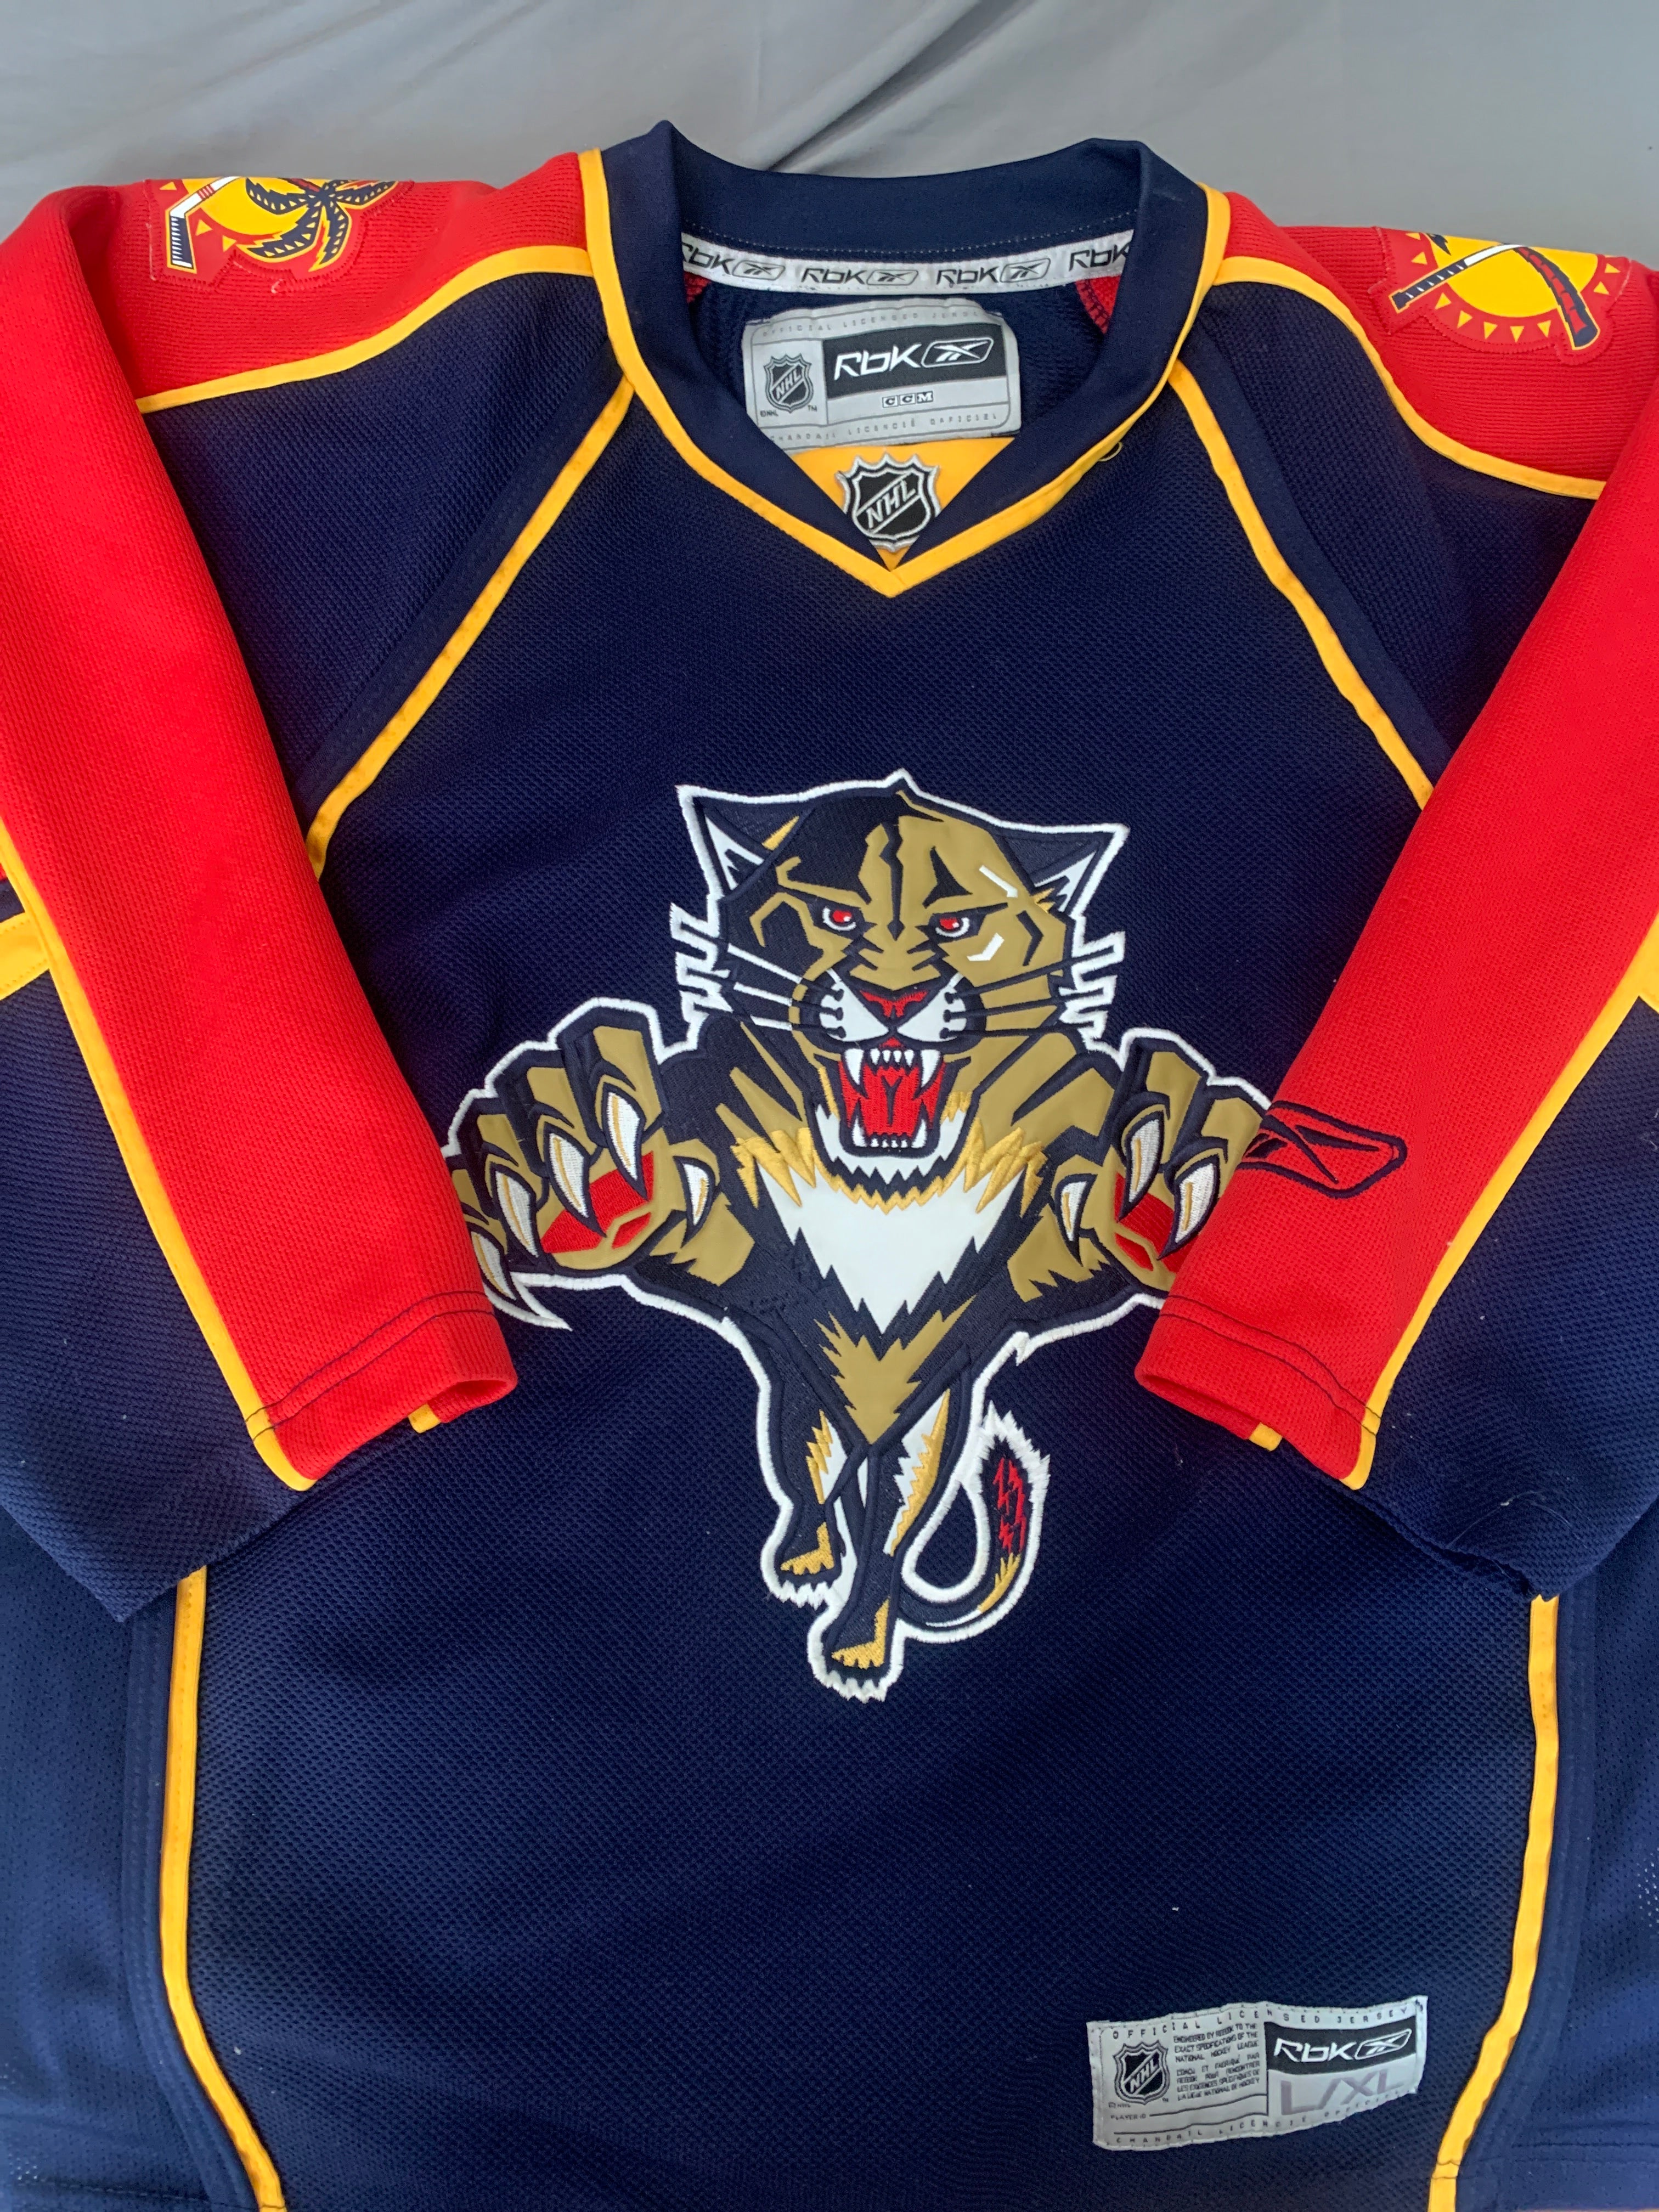 Reebok Premier NHL Jersey Florida Panthers Team Red sz XL